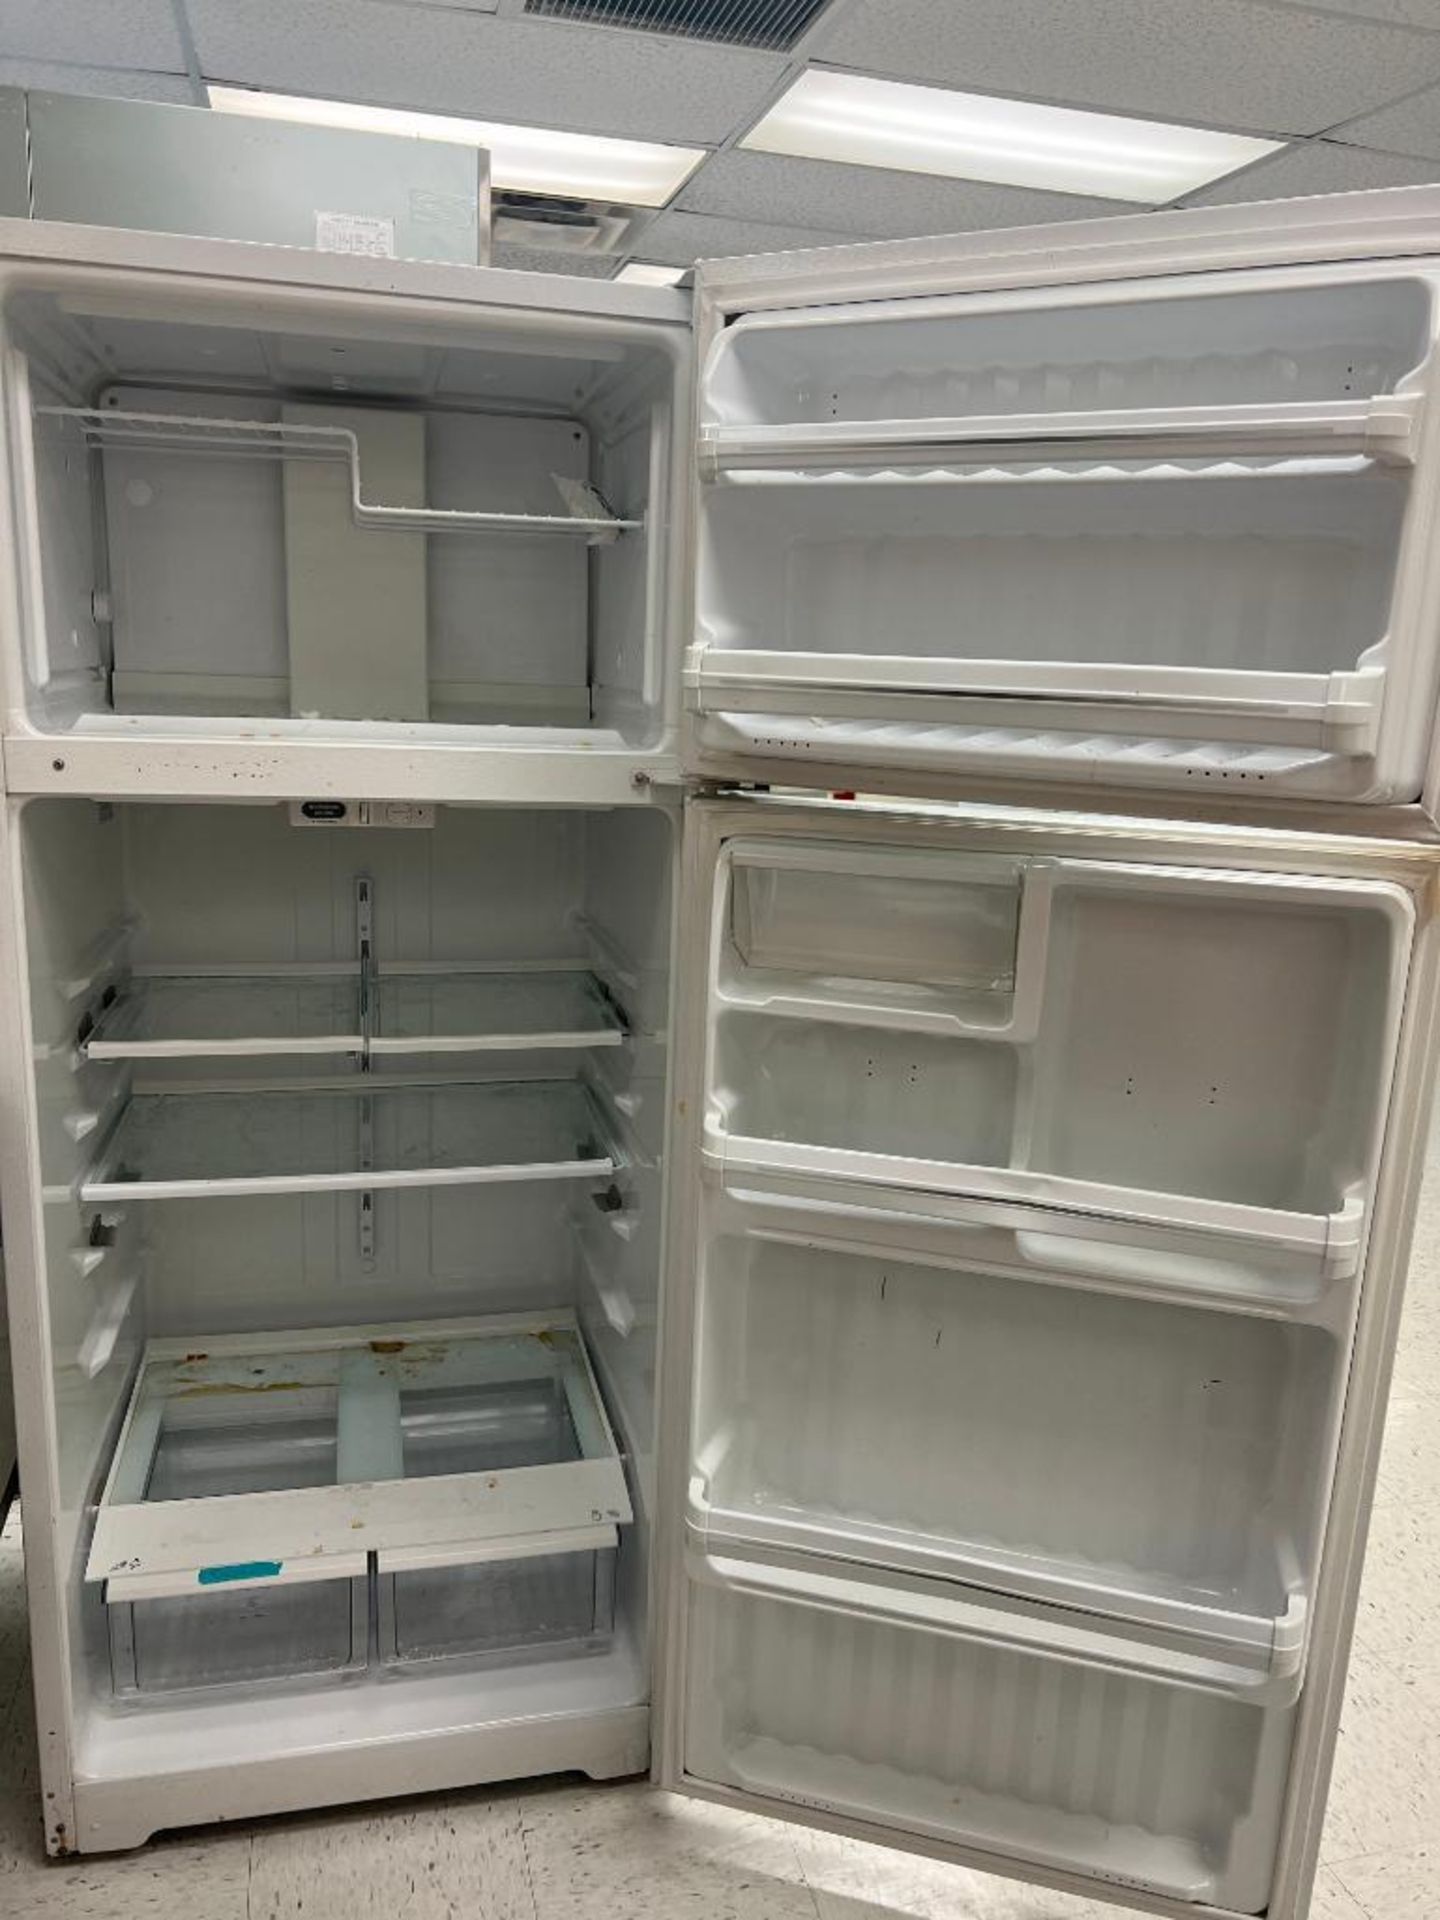 GE Refrigerator/Freezer, Model: GTS18HBMDRWW - Rigging Fee: $100 - Image 2 of 2